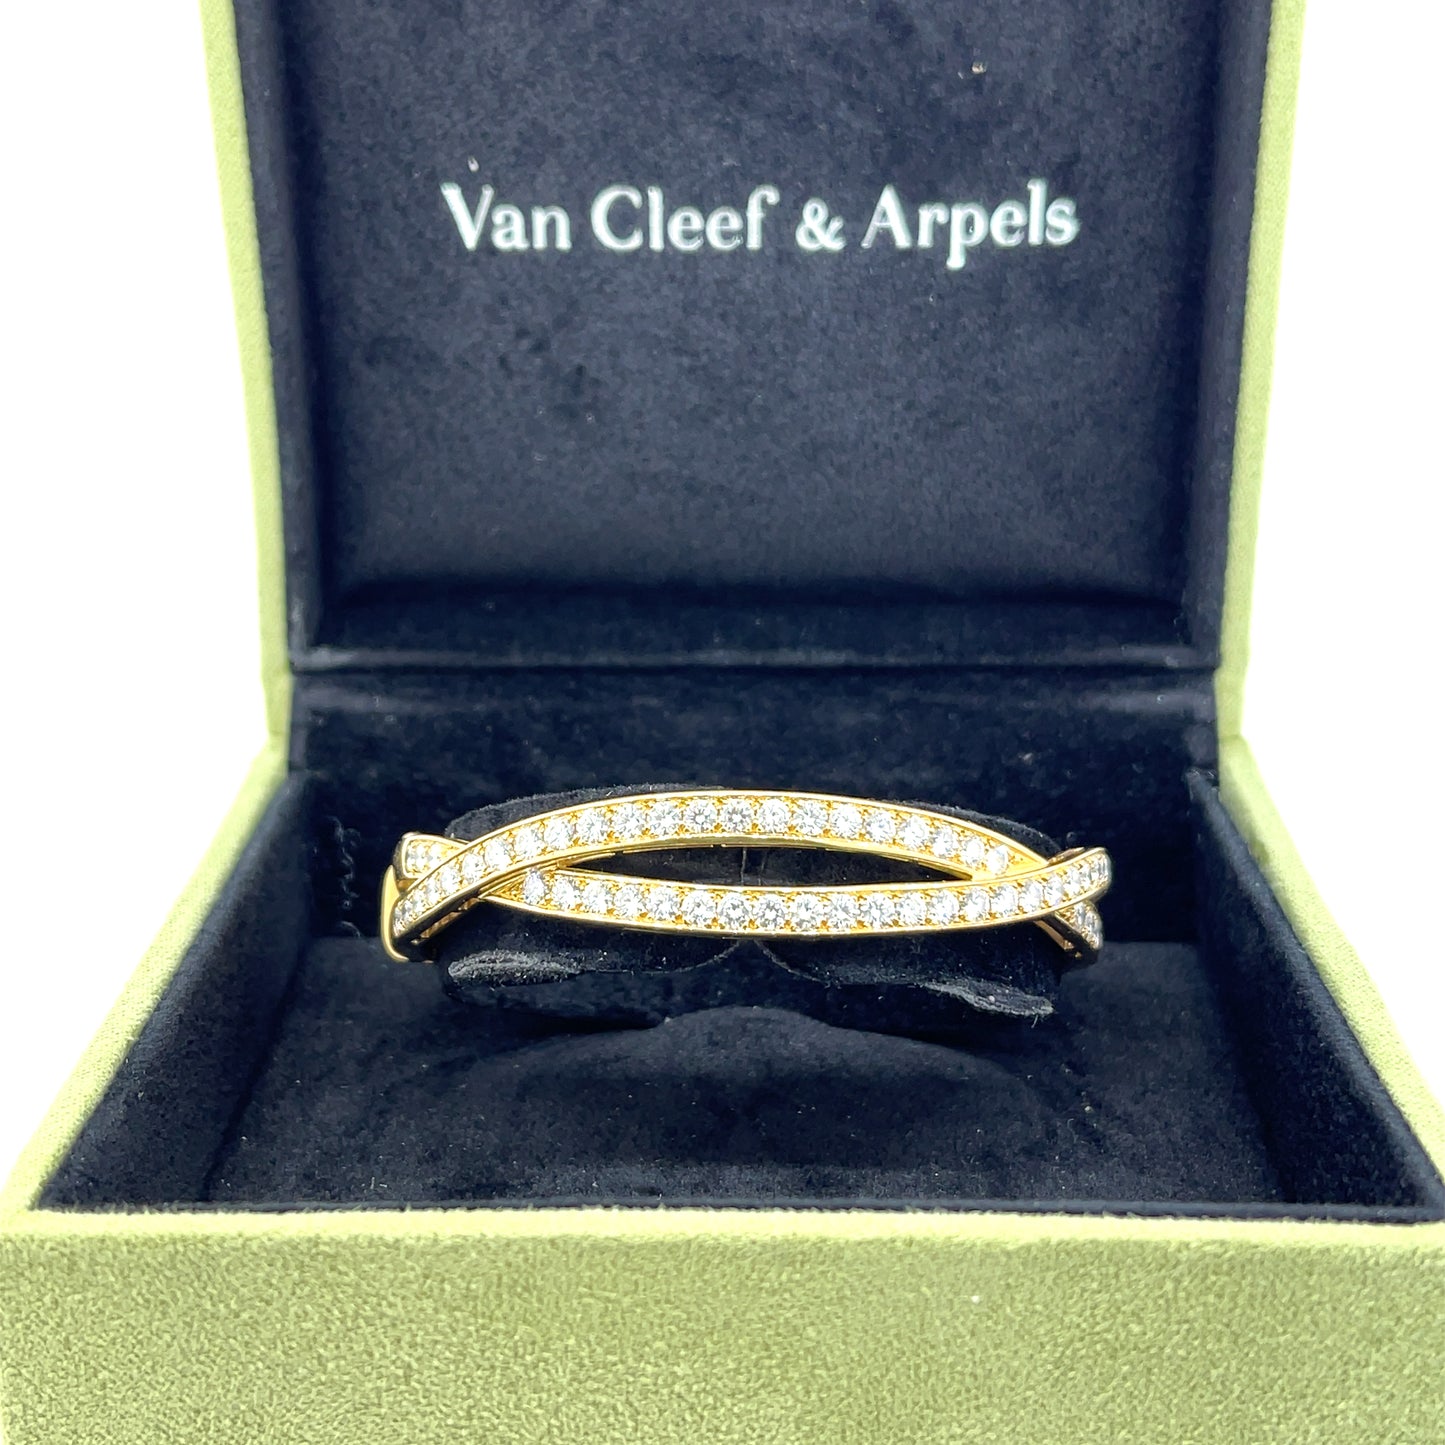 Rare Van Cleef & Arpels 18k Yellow Gold Diamond Bangle